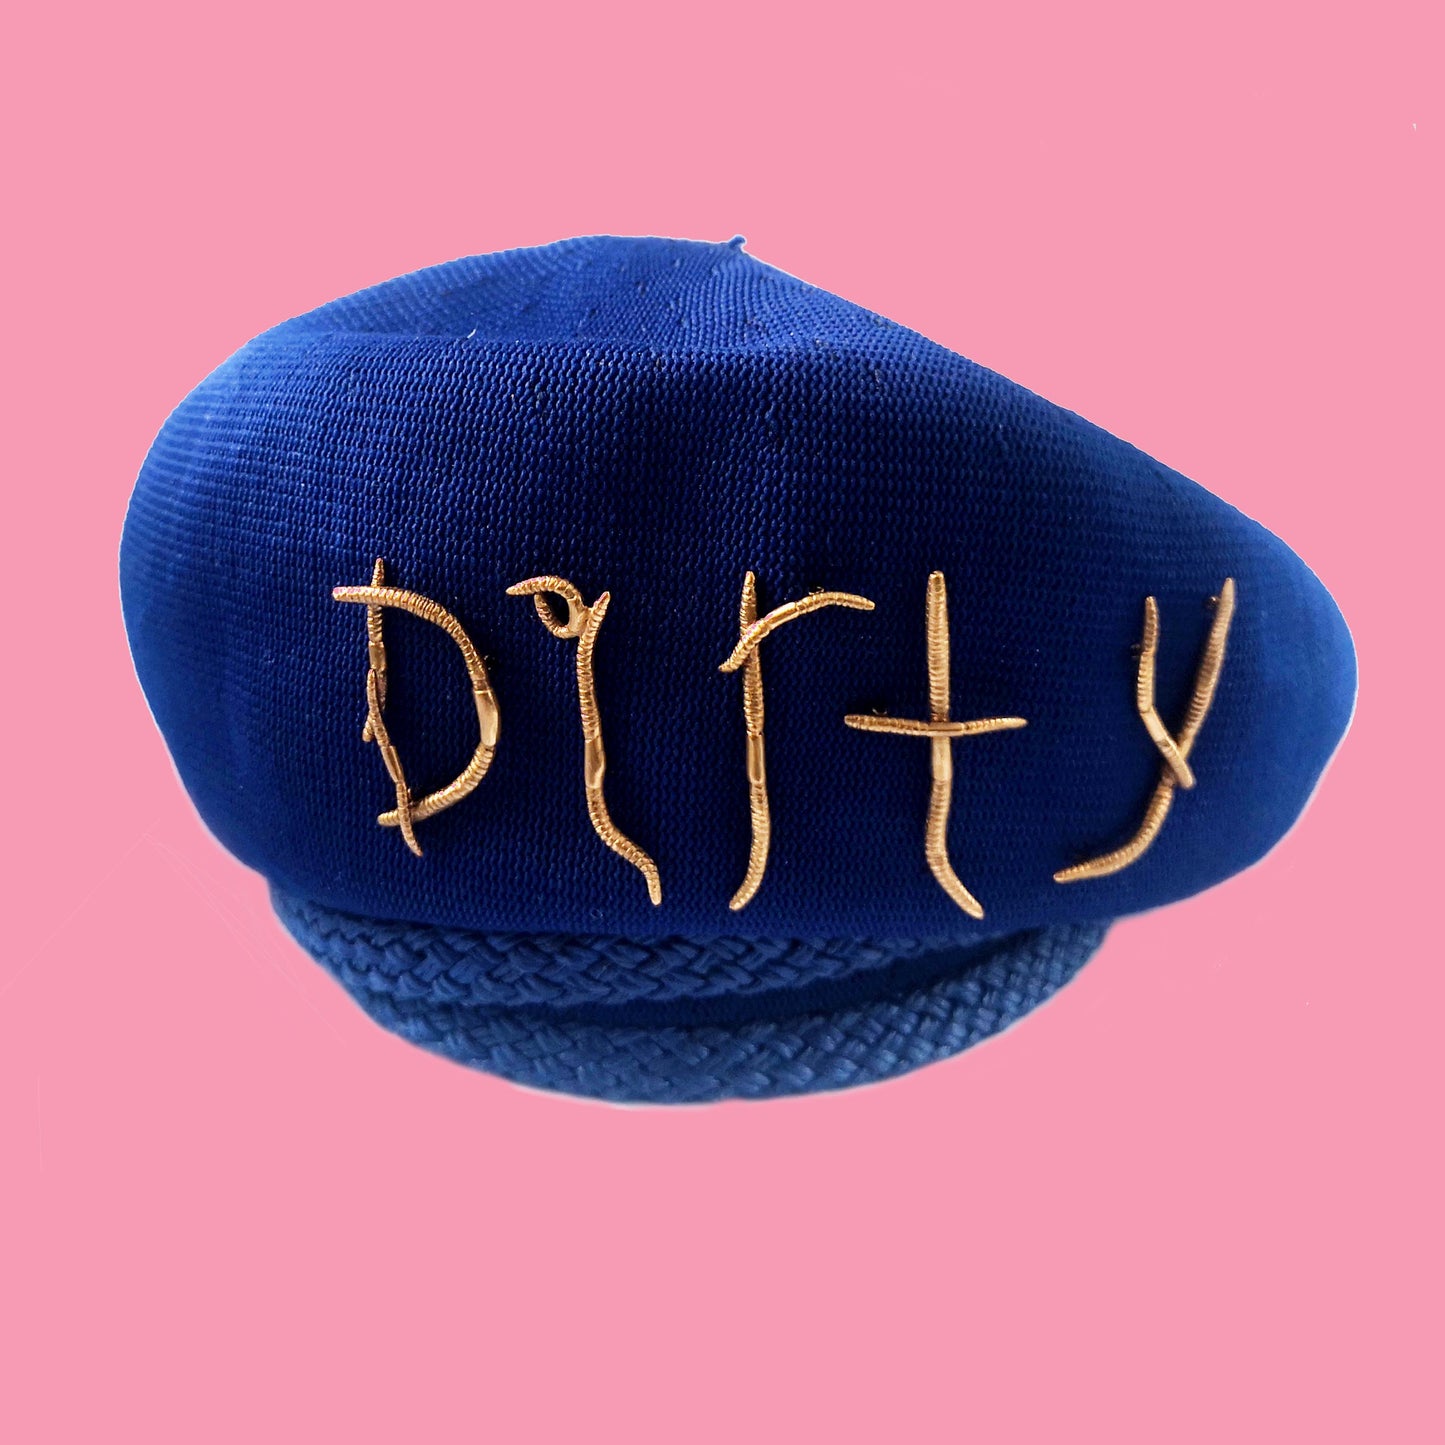 Dirty Hat